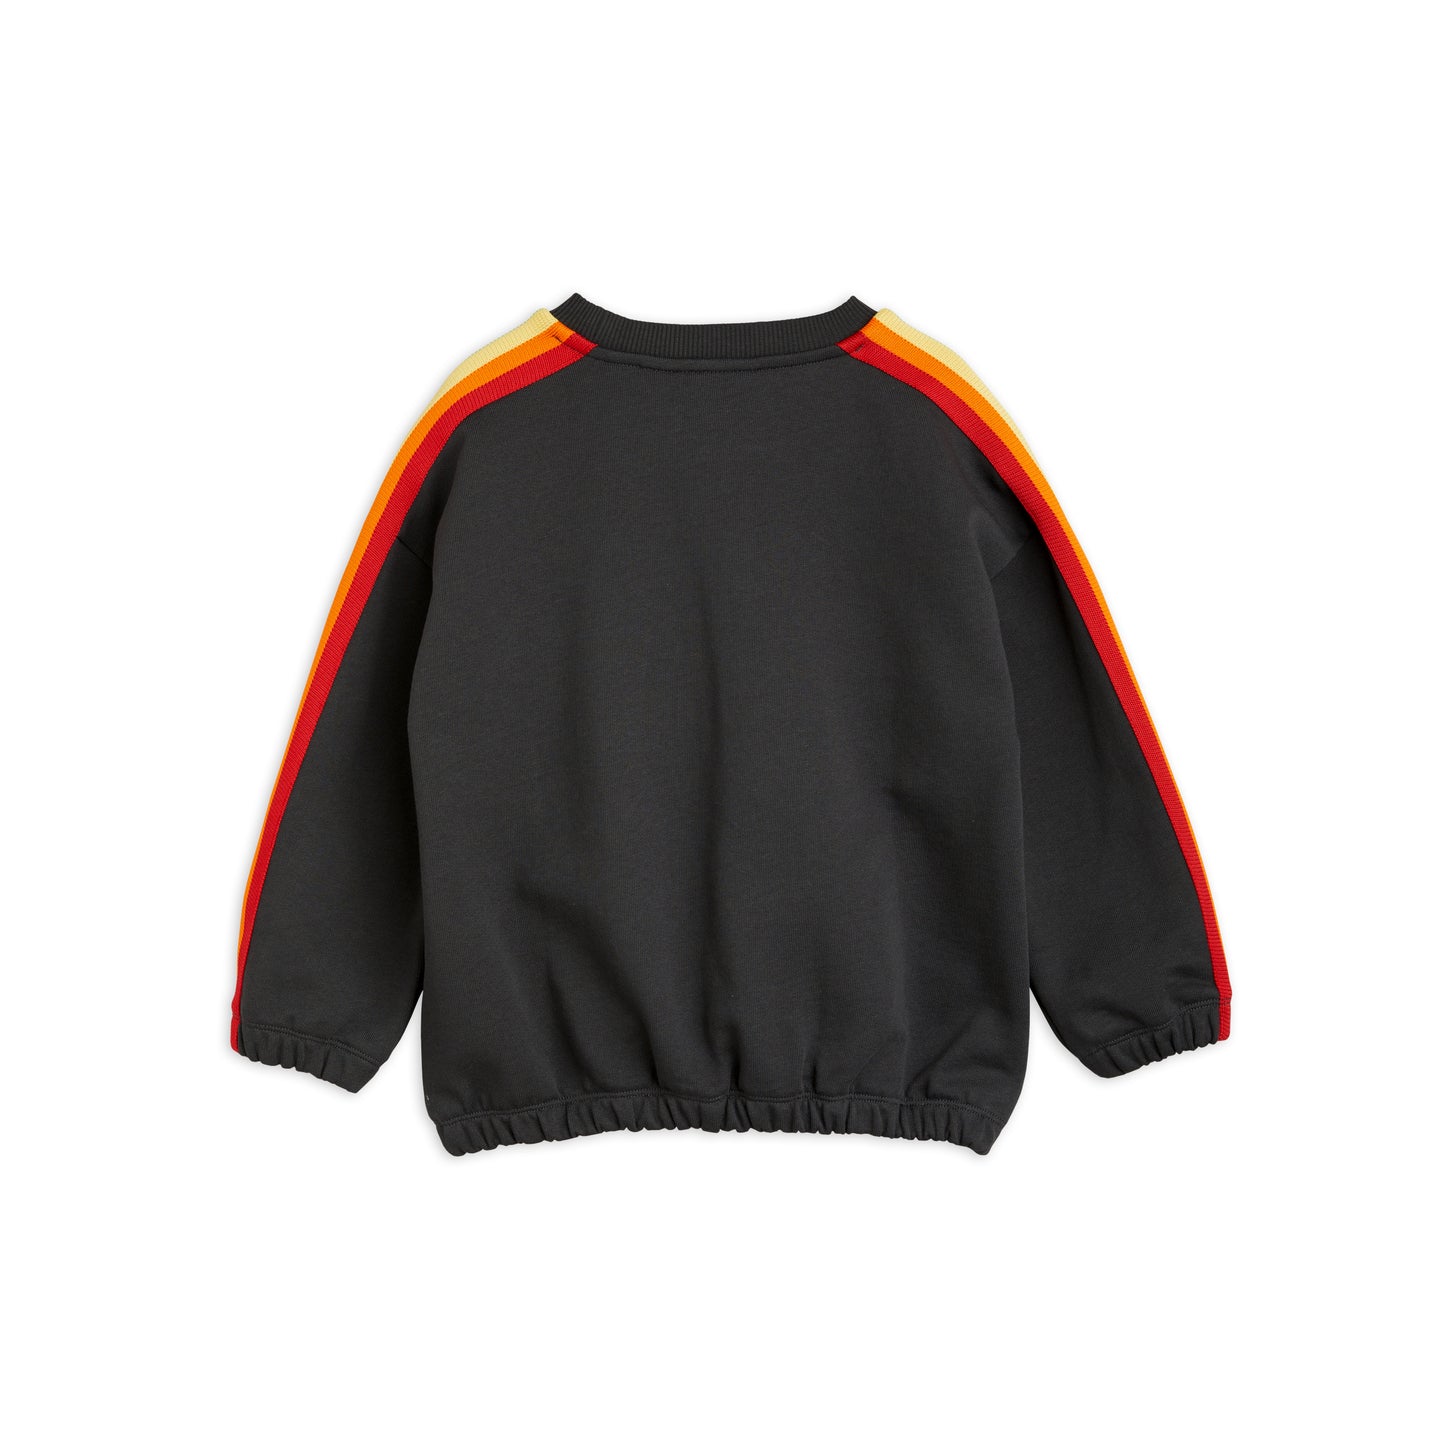 MINI RODINI Rainbow Stripe Sweatshirt ALWAYS SHOW